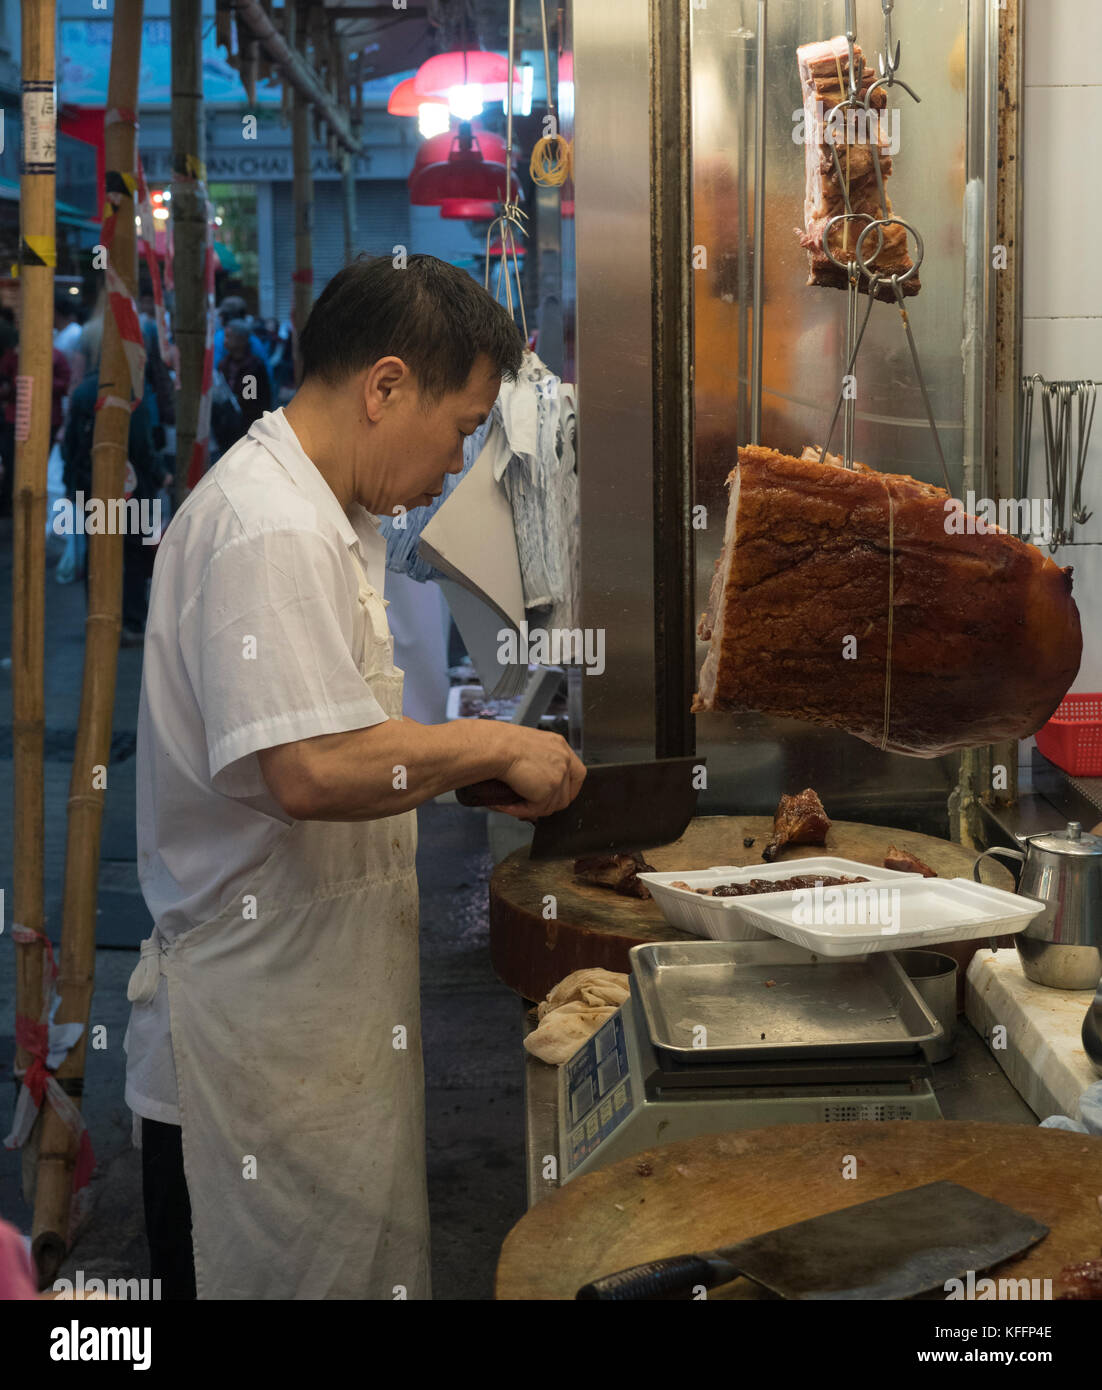 Venditori di mercato a Yau Tei Mercato coperto Mercato alimentare, Hong Kong, Cina, Asia. Foto Stock